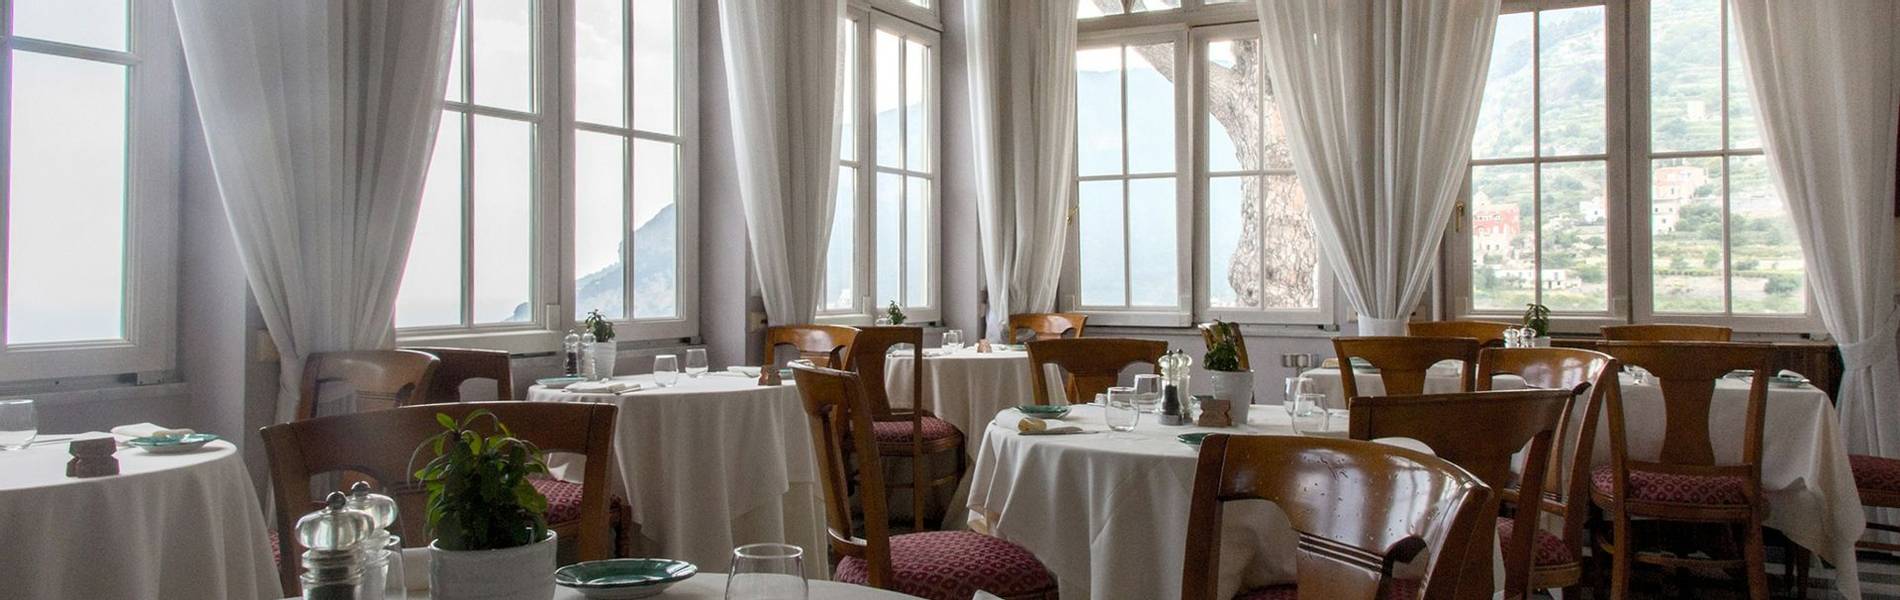 Villa Maria, Amalfi Coast, Italy, restaurant - veranda.jpg